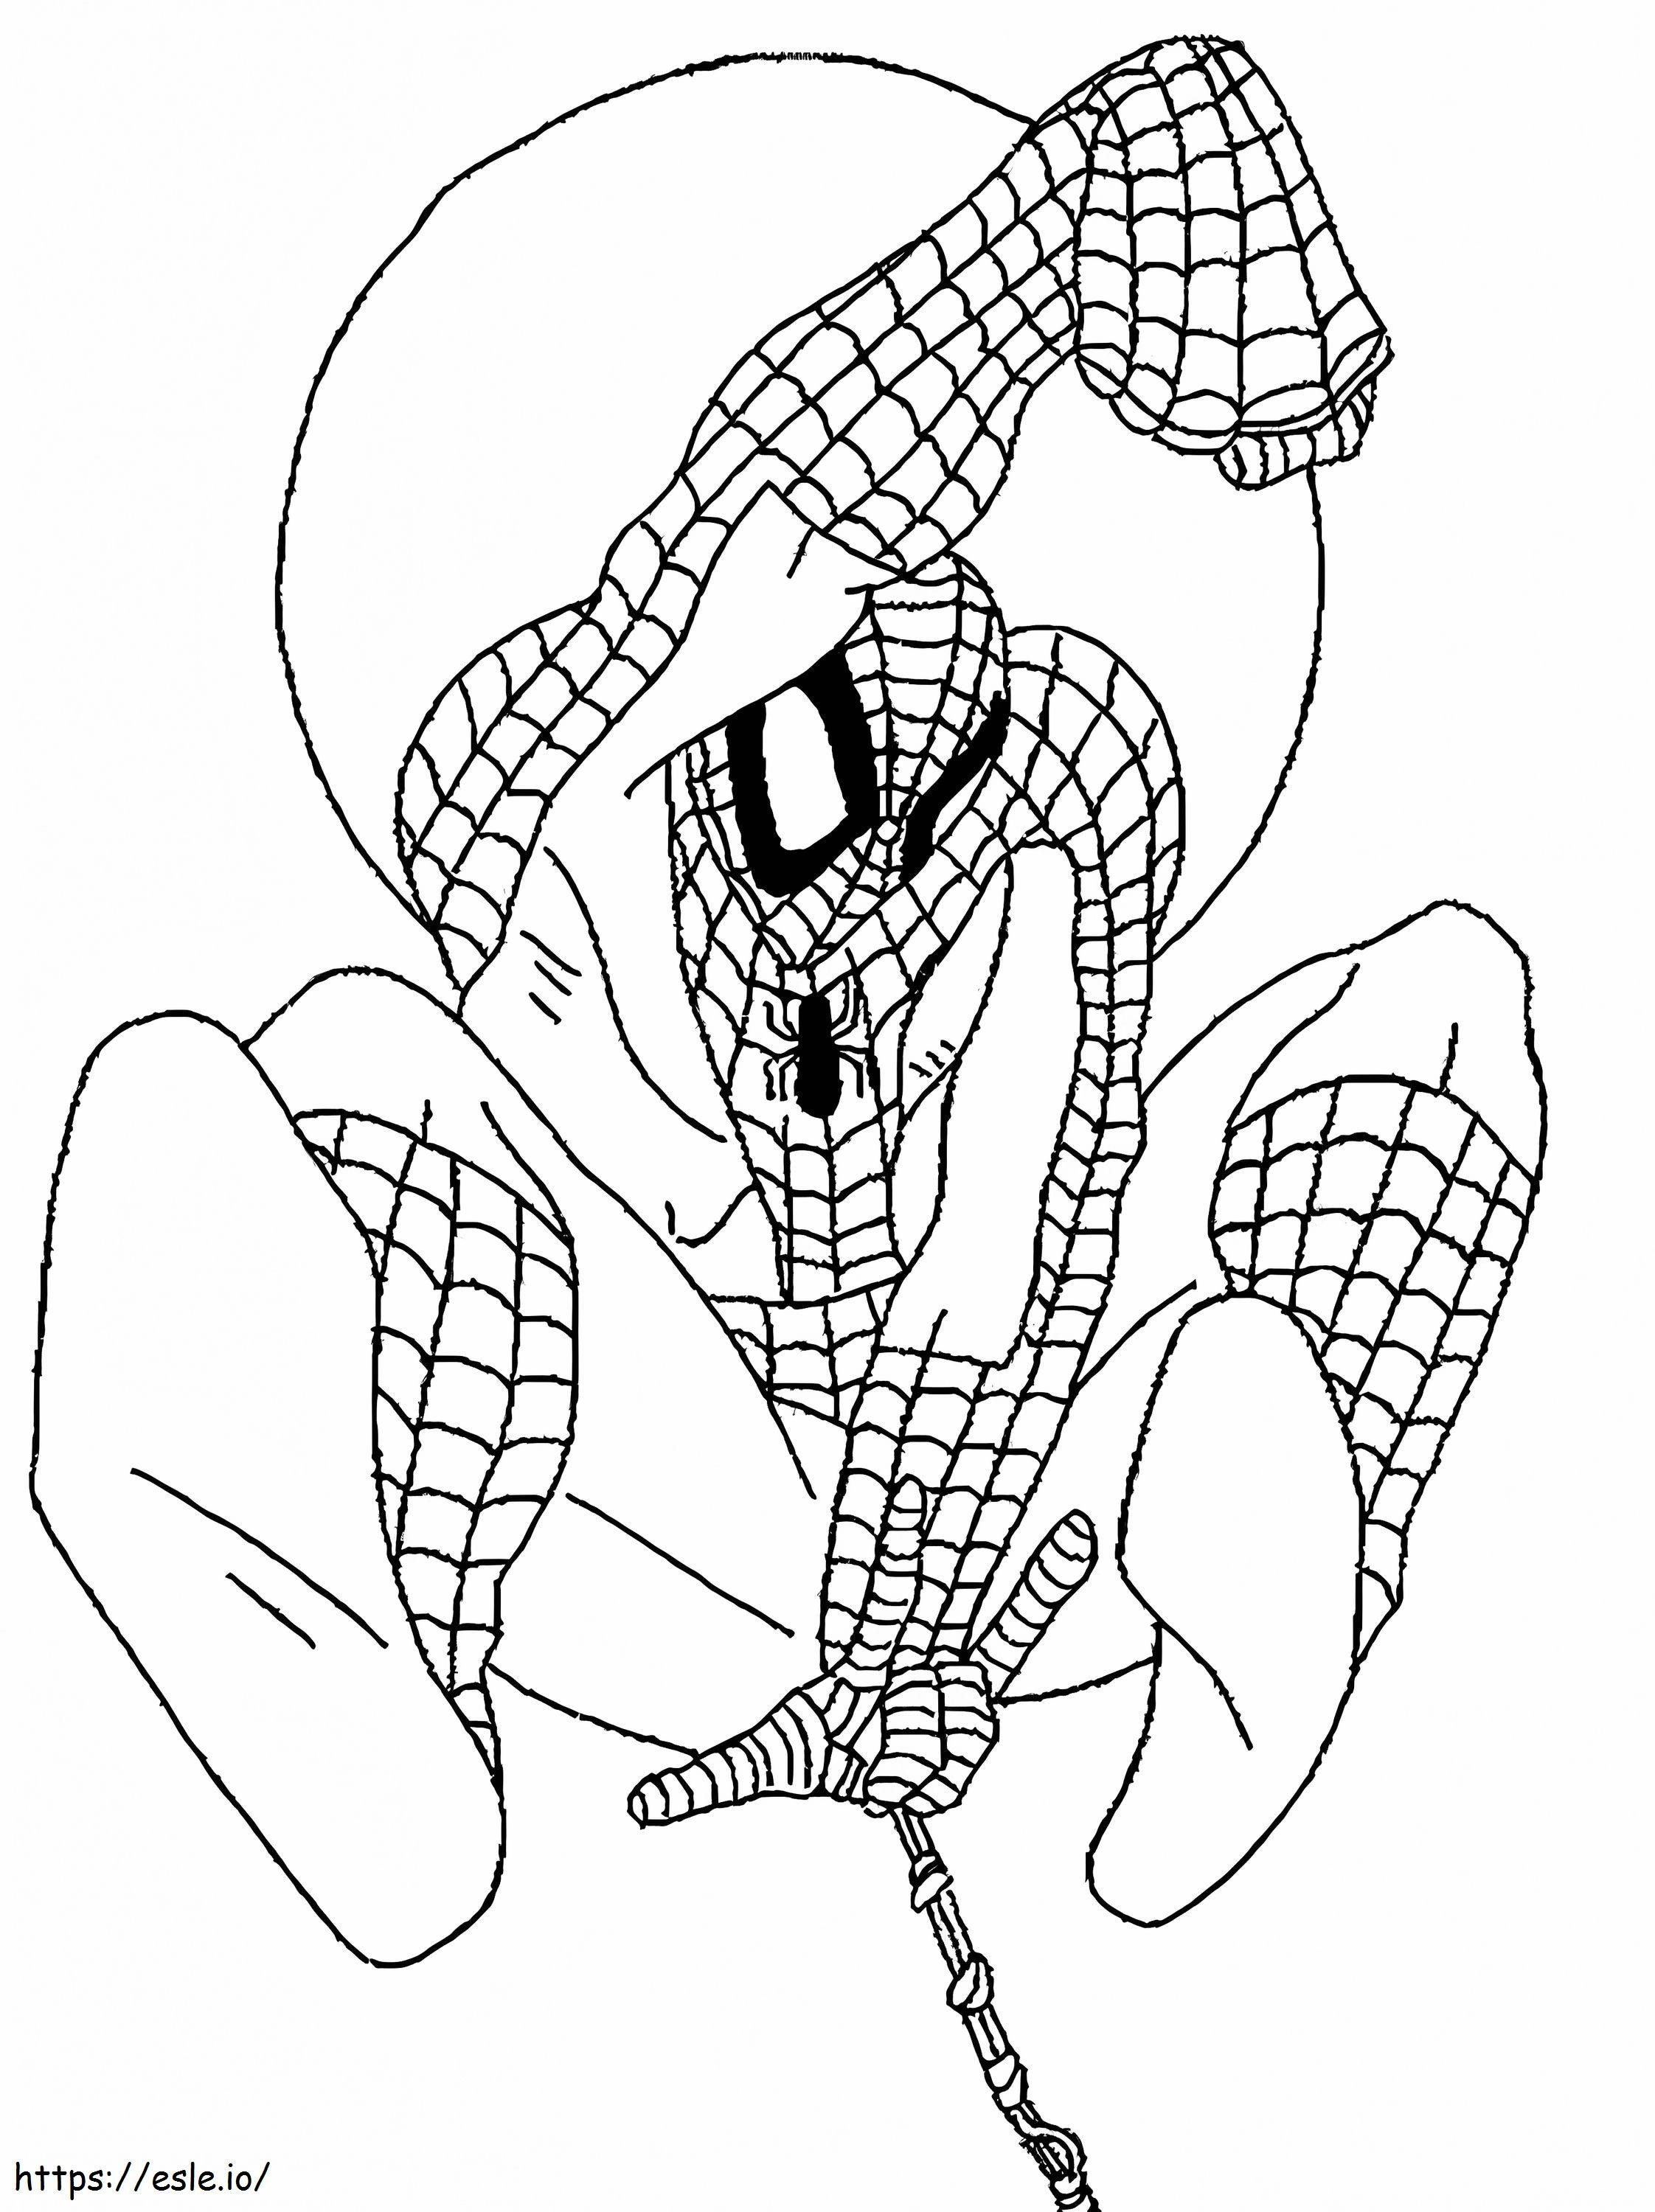 Coloriage Spiderman 4 766X1024 à imprimer dessin